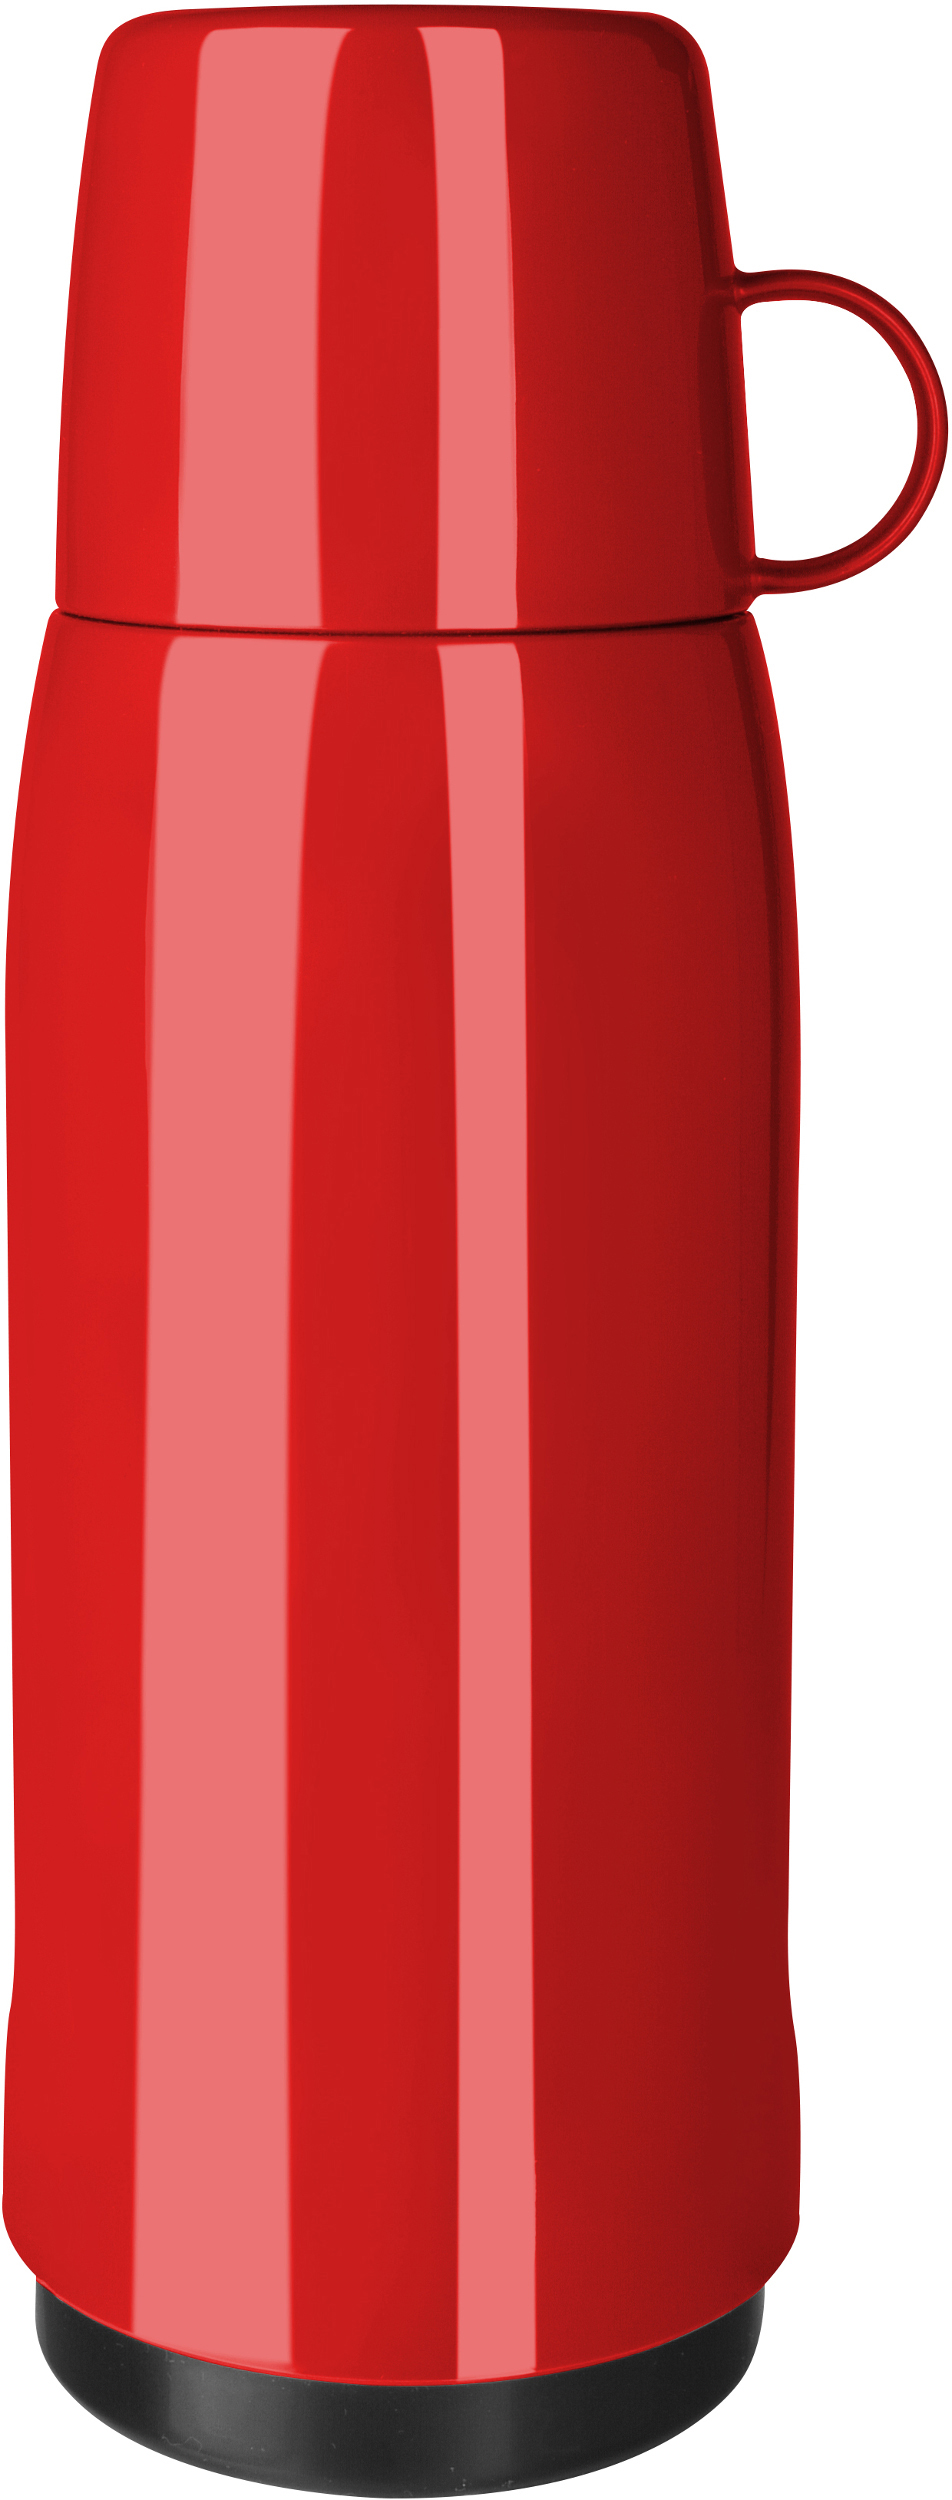 EMSA 502447 Rocket Isolierflasche Rot